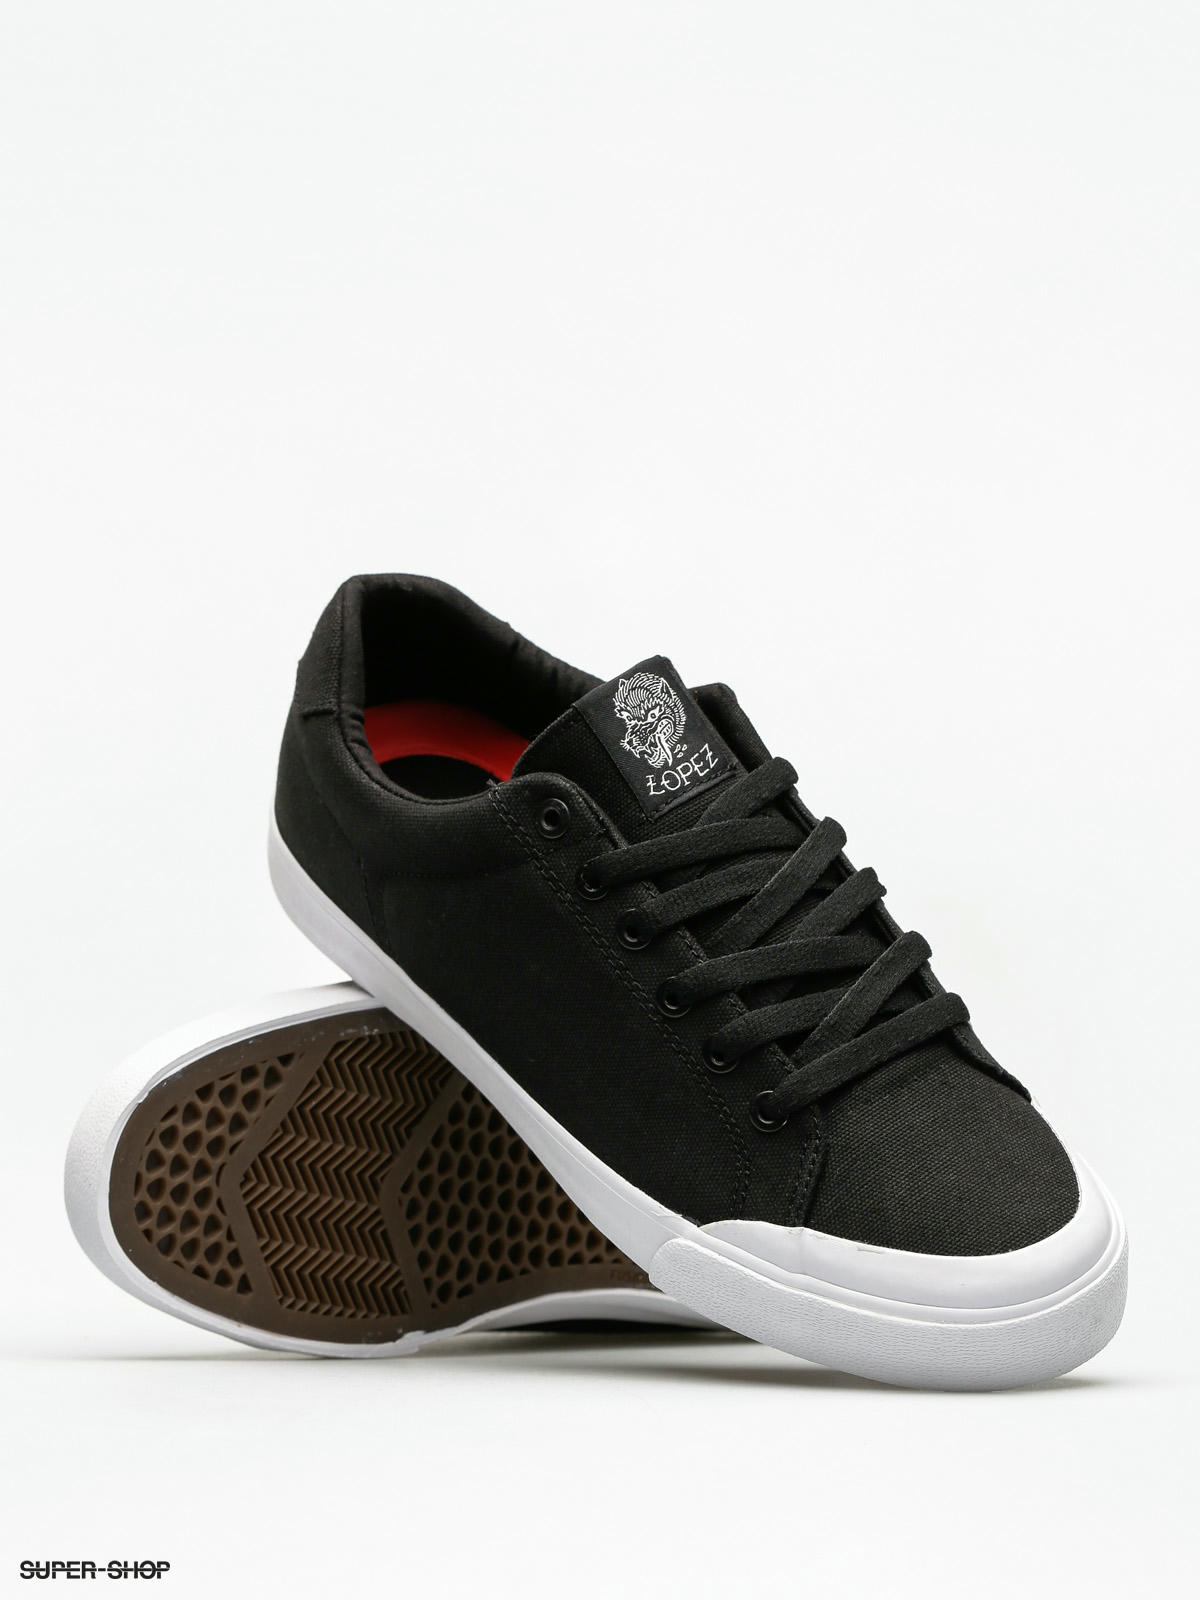 Circa Shoes Lopez 50R (black/white/gum)